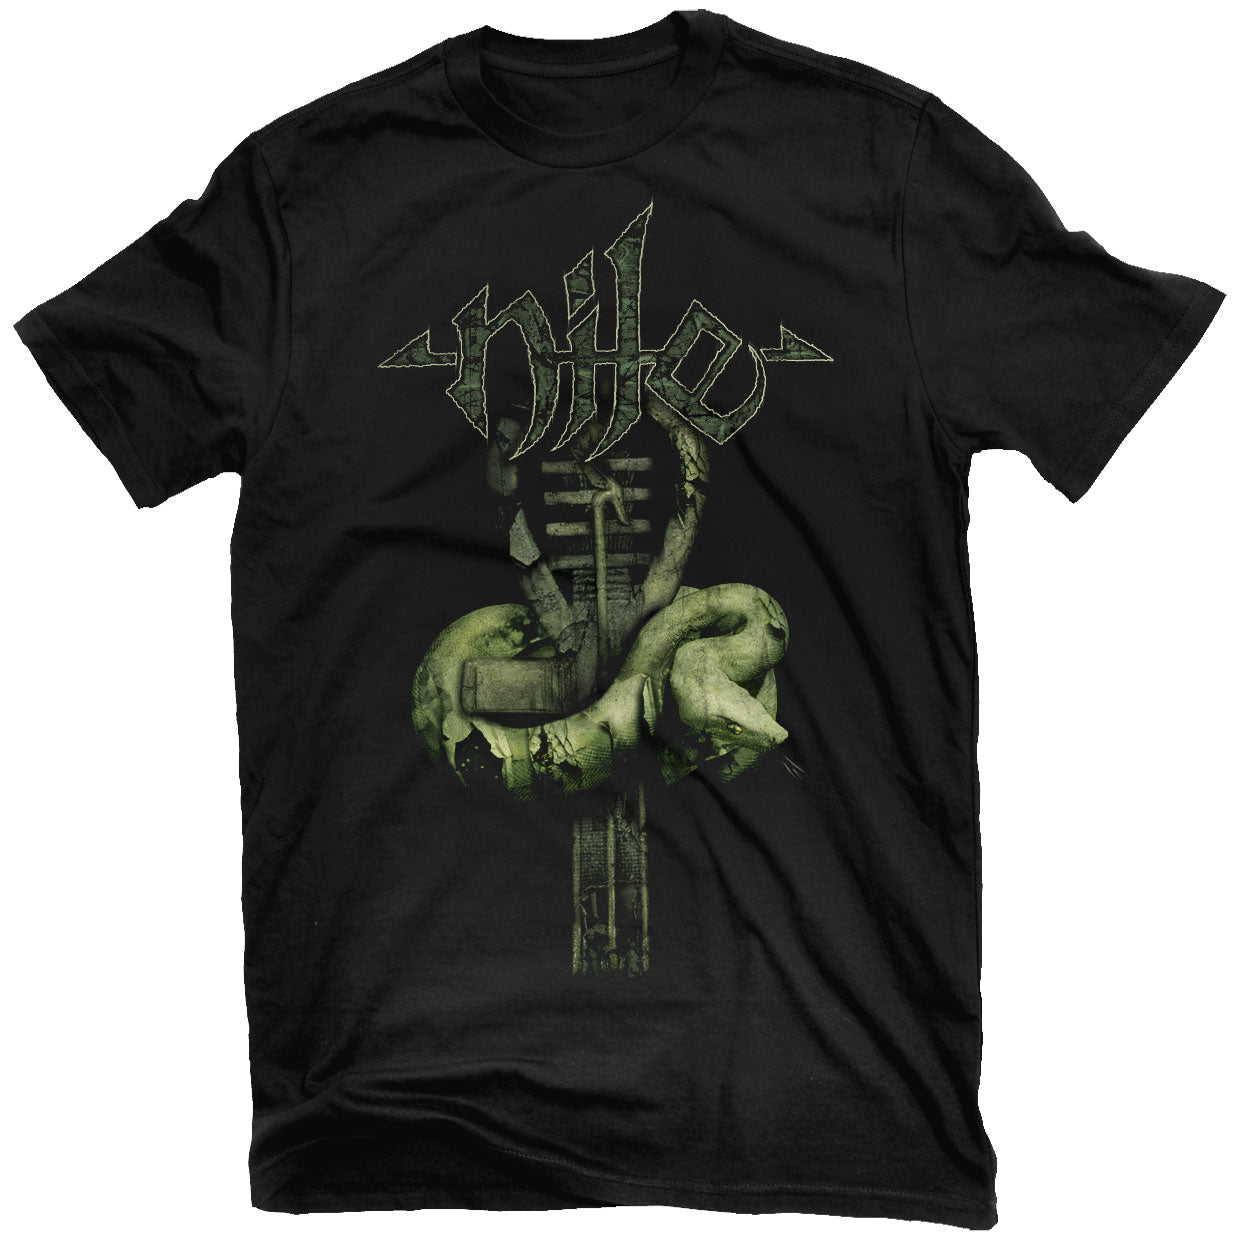 Nile "In Their Darkened Shrines" T-Shirt